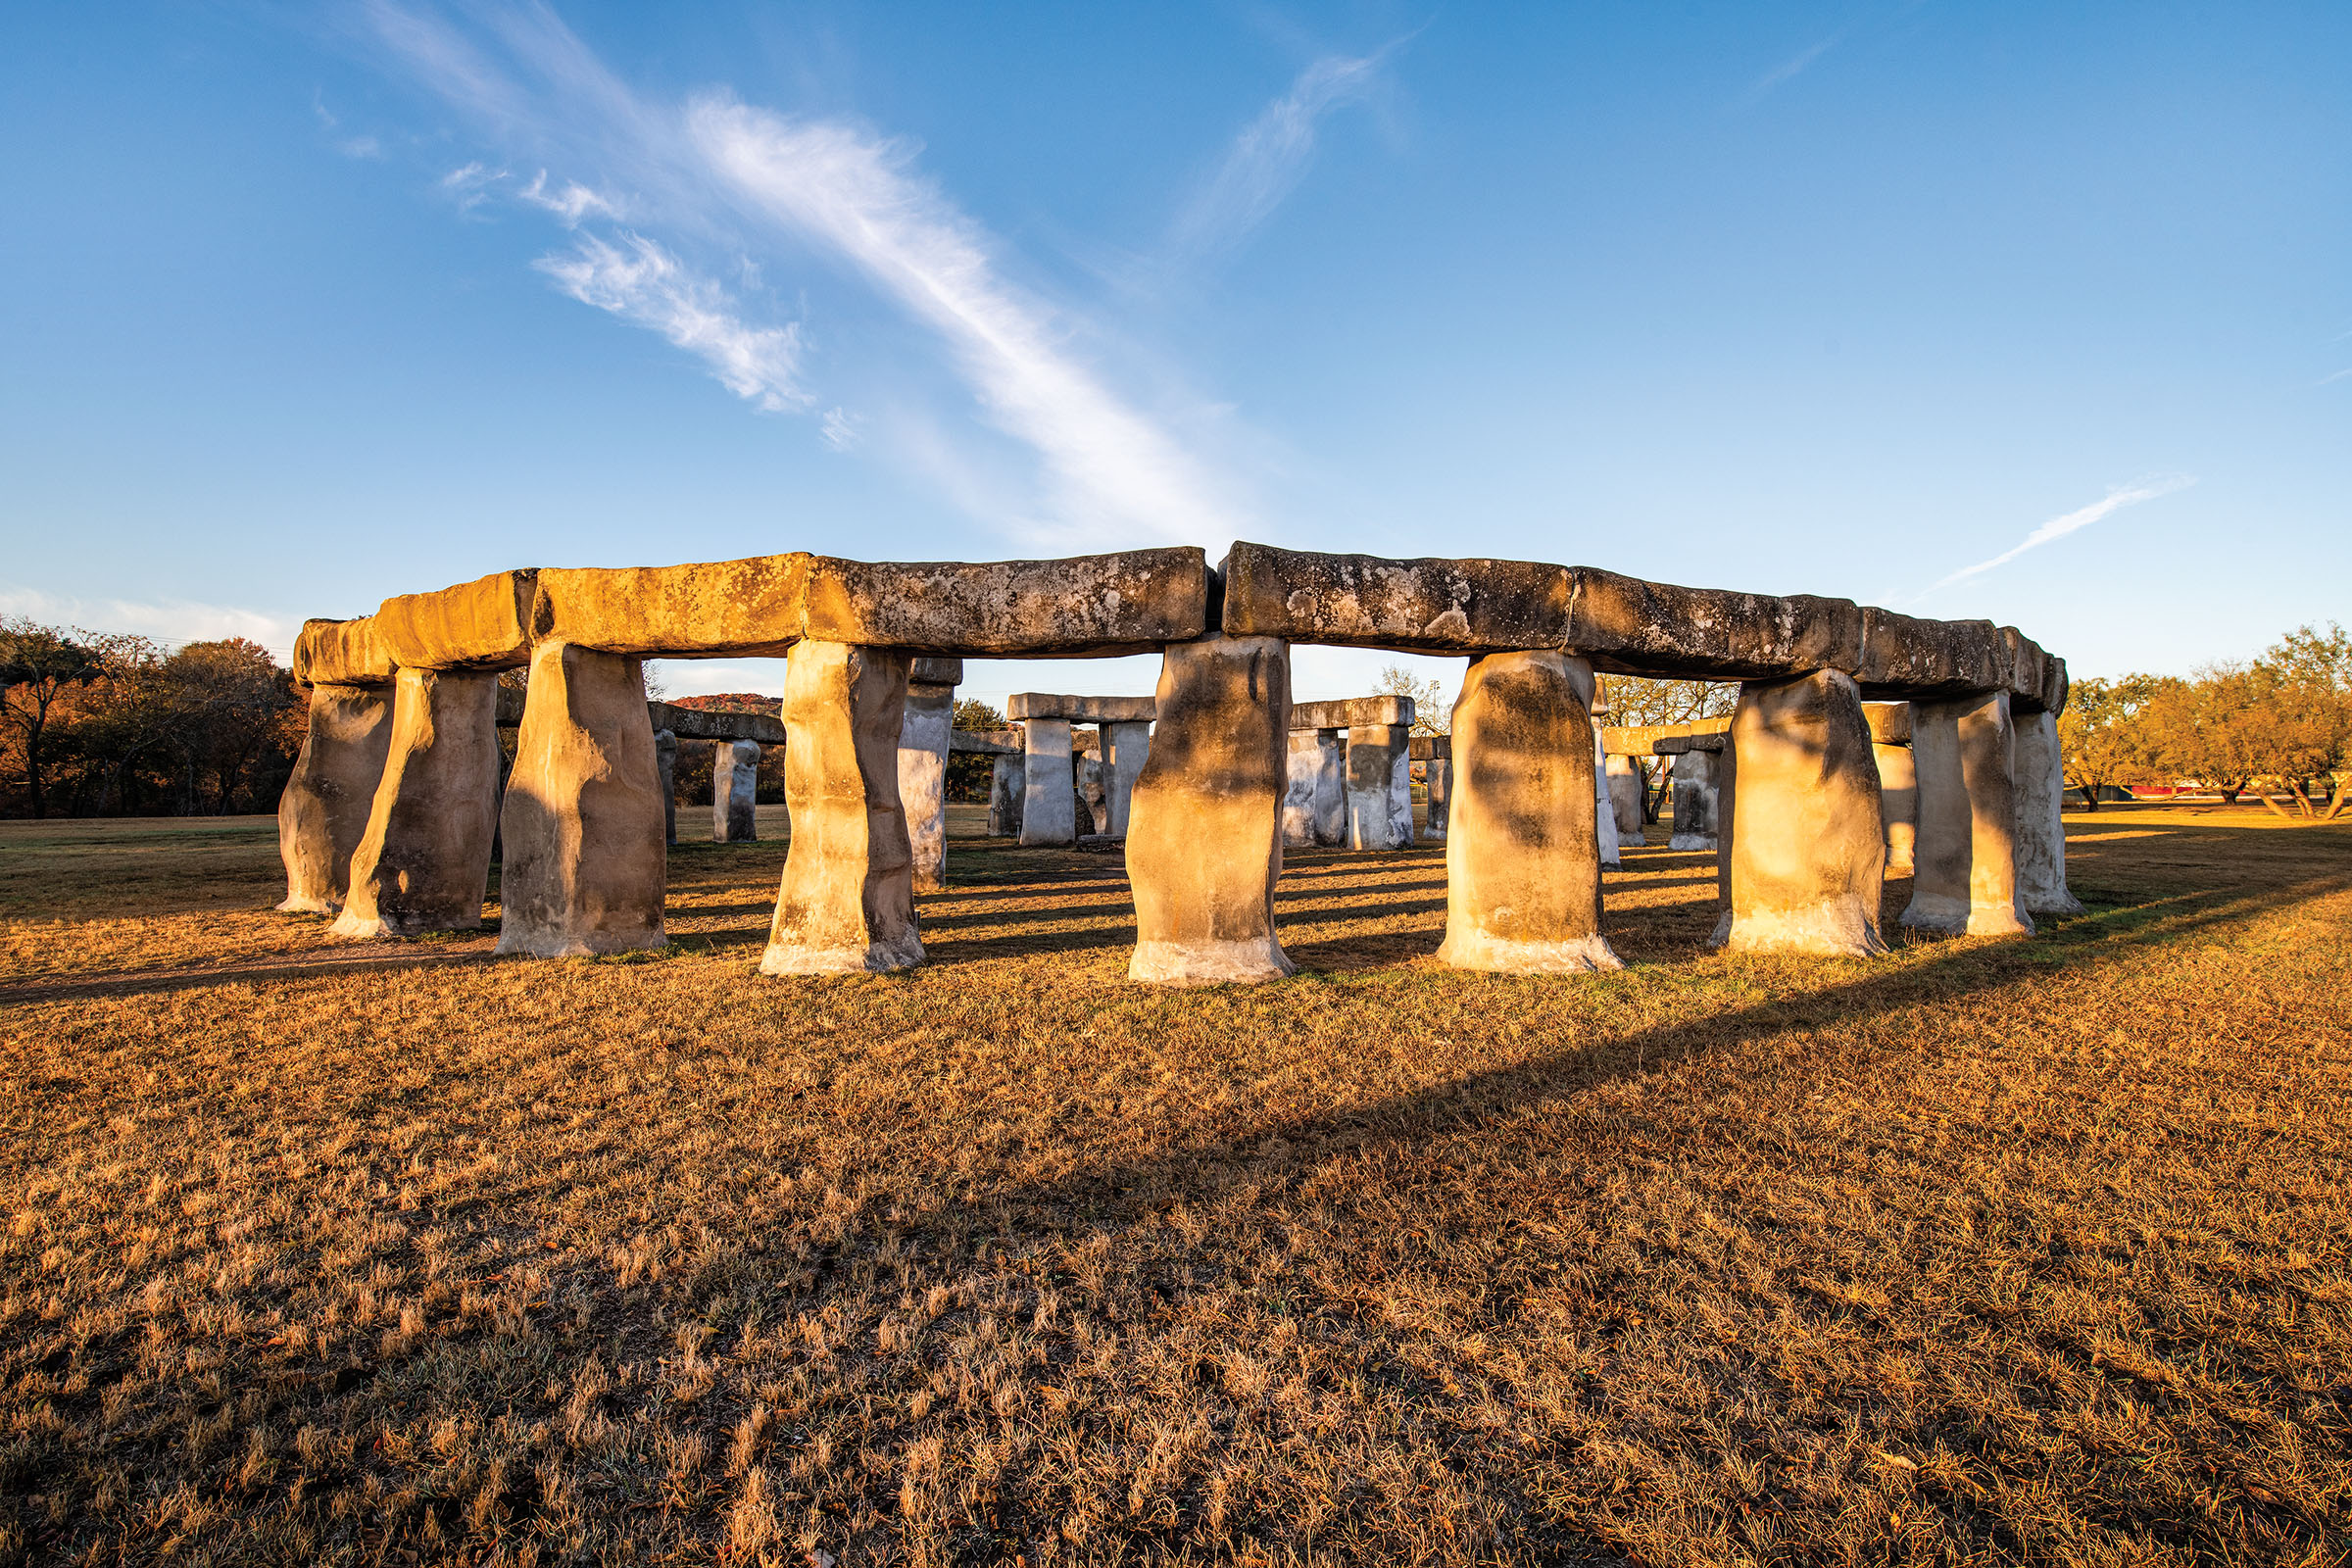 A replica of Stonehenge in Ingram Texas, near Kerville